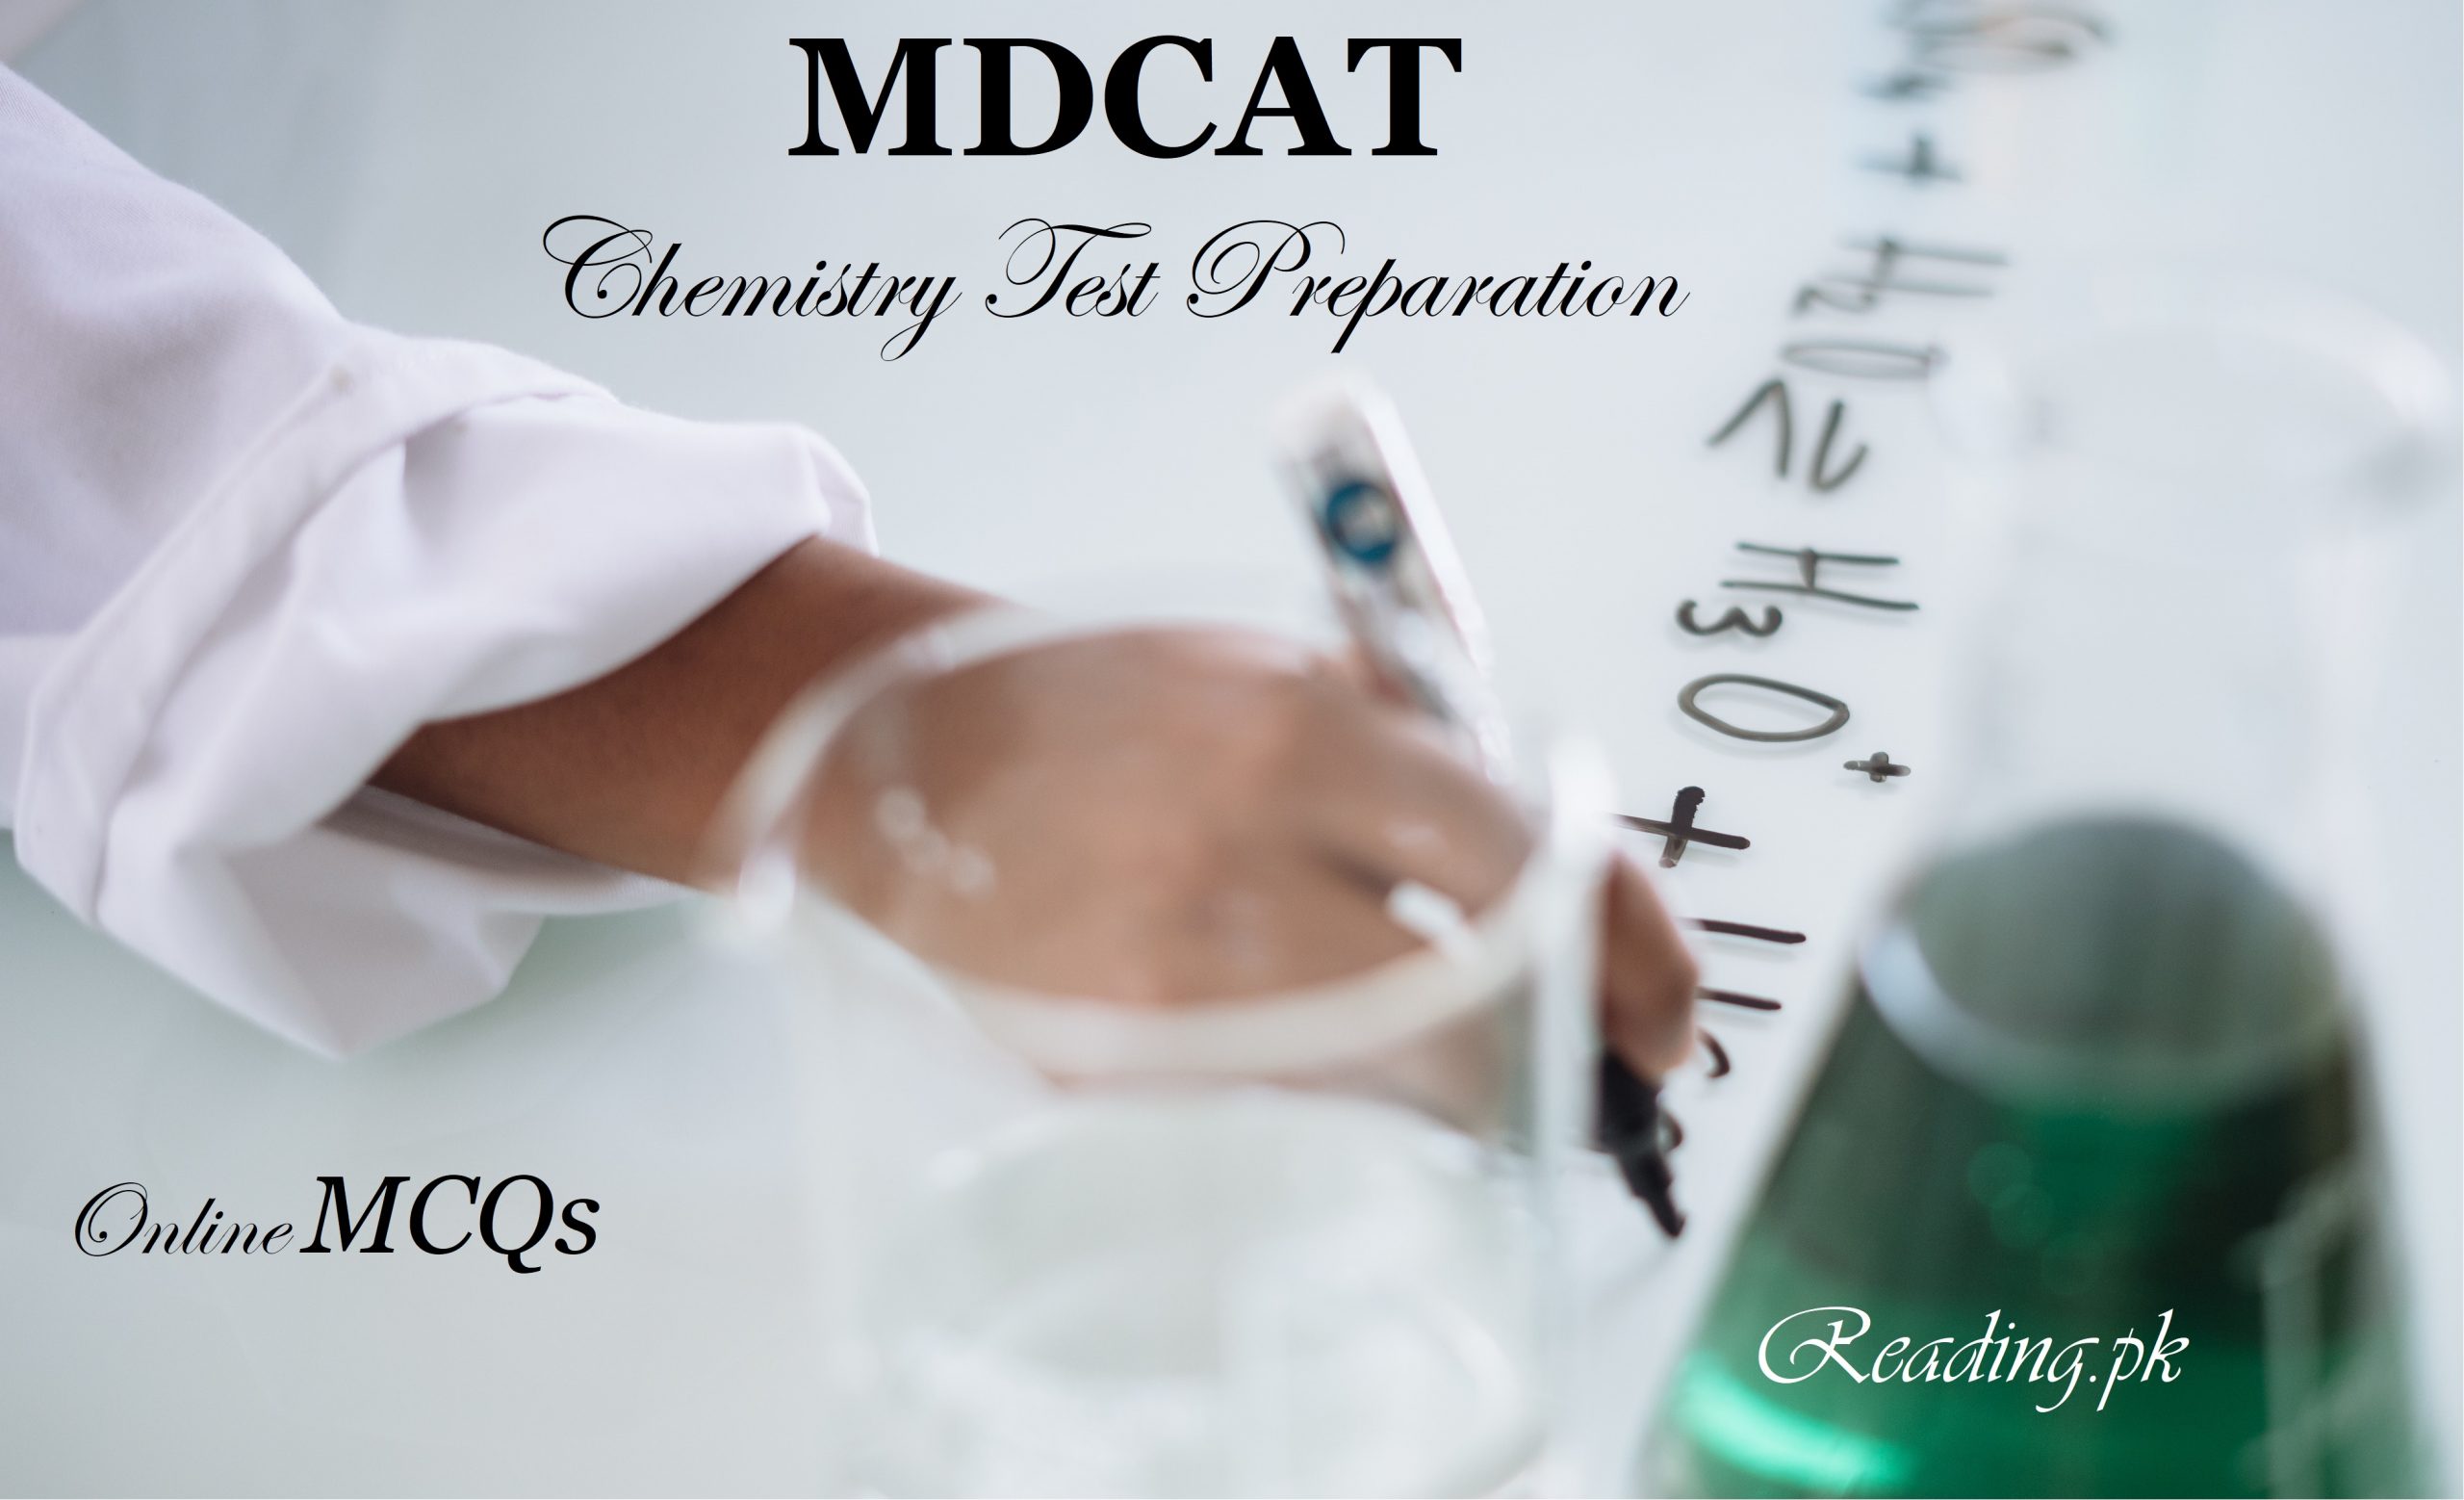 MDCAT Chemistry Test Preparation Online MCQs